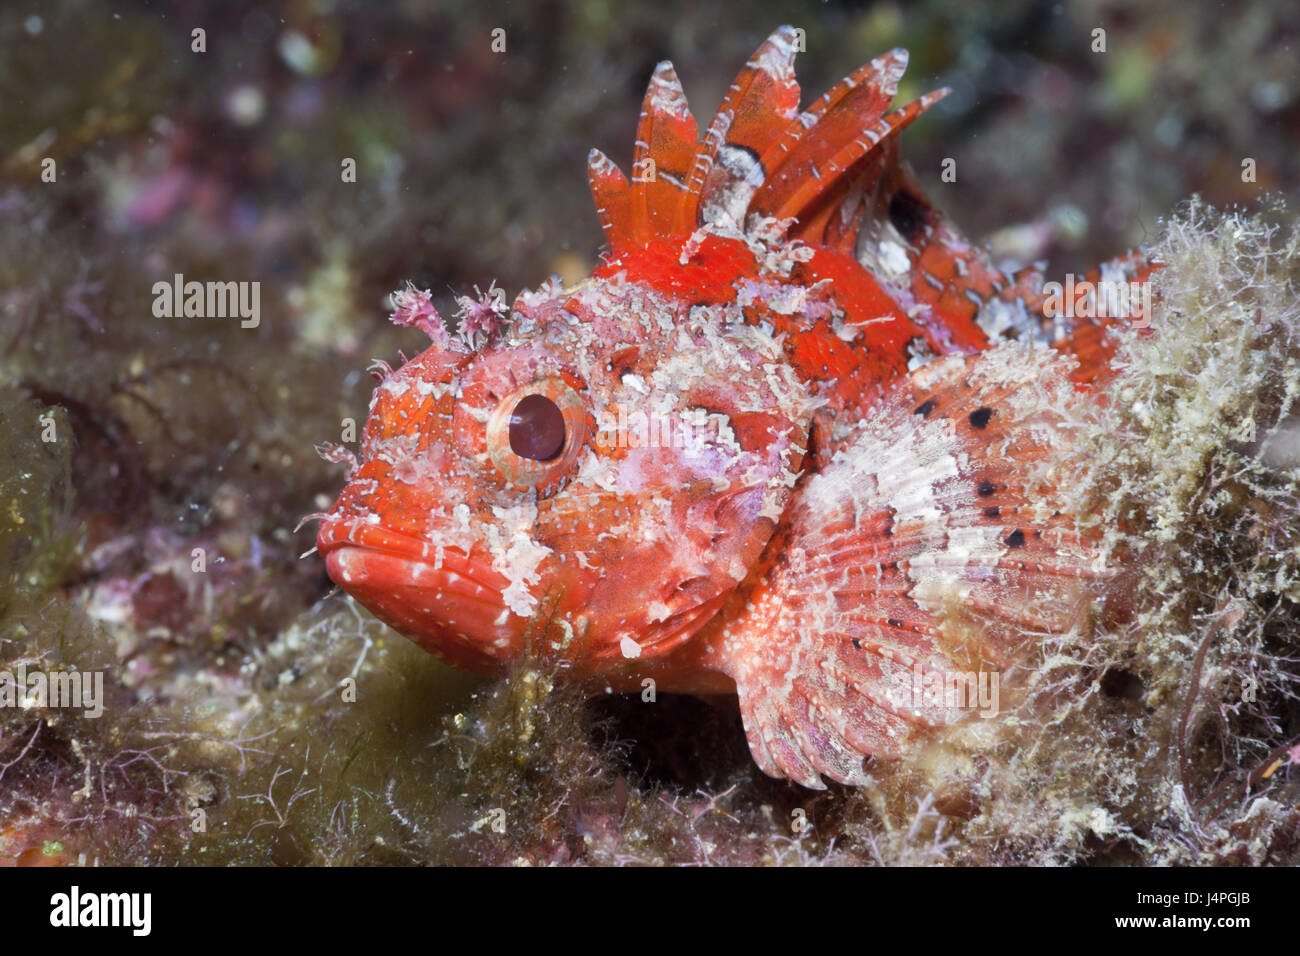 Small red scorpion fish, Scorpaena notata, Stock Photo